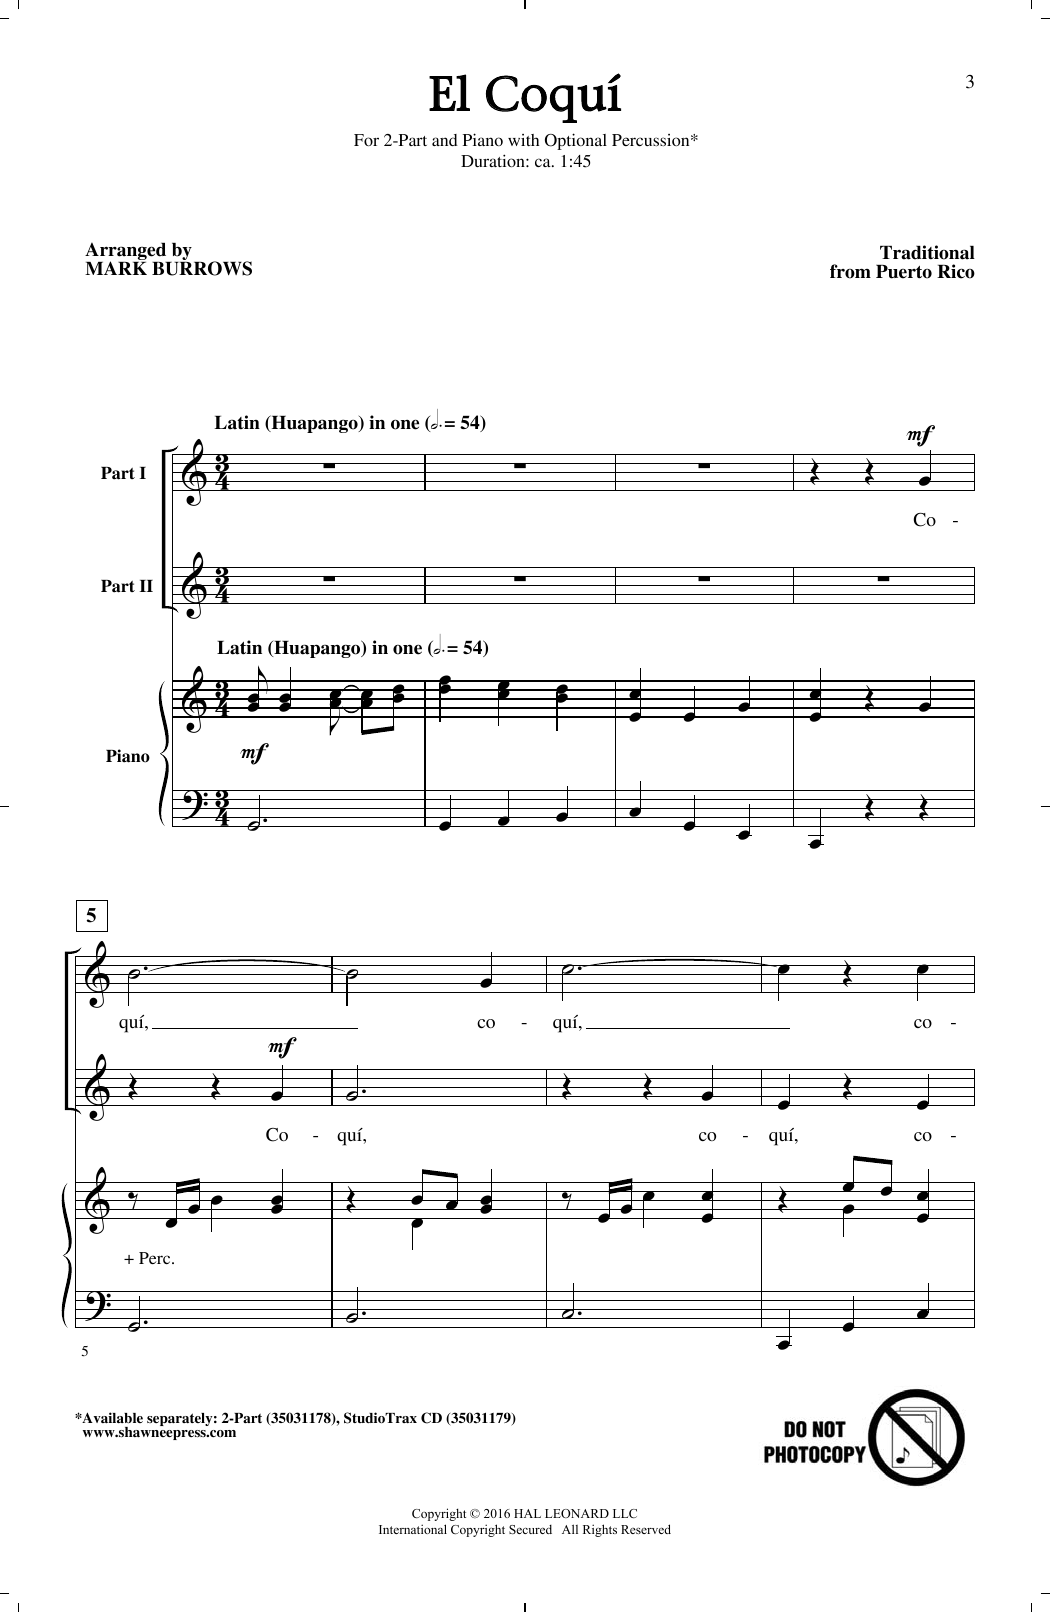 Mark Burrows El Coqui Sheet Music Notes & Chords for 2-Part Choir - Download or Print PDF